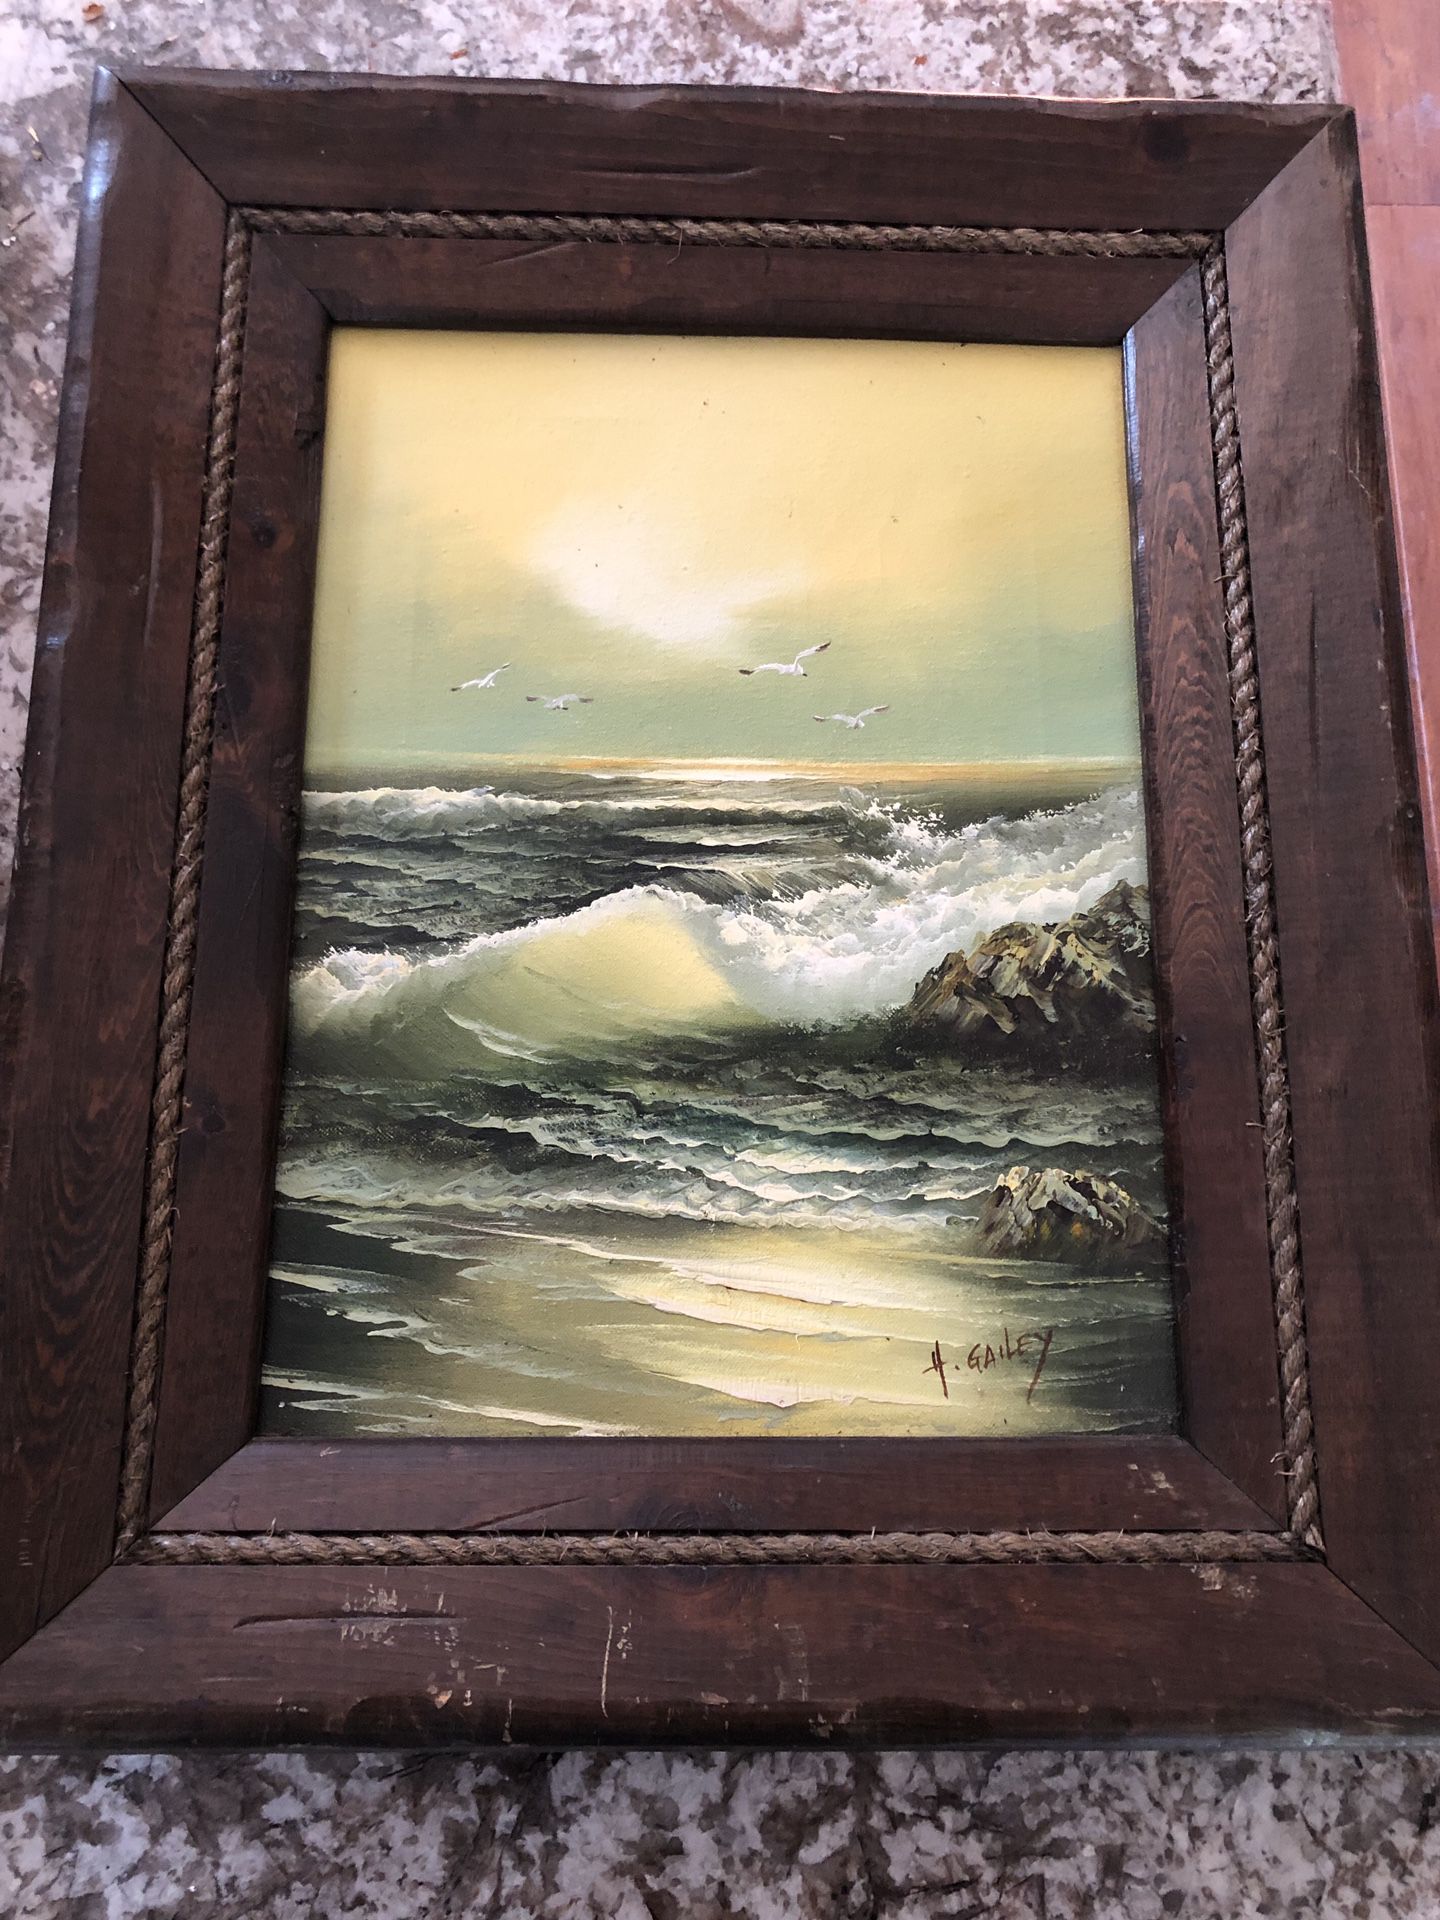 18”X22” Framed Oil Painting Ocean Waves Seagulls